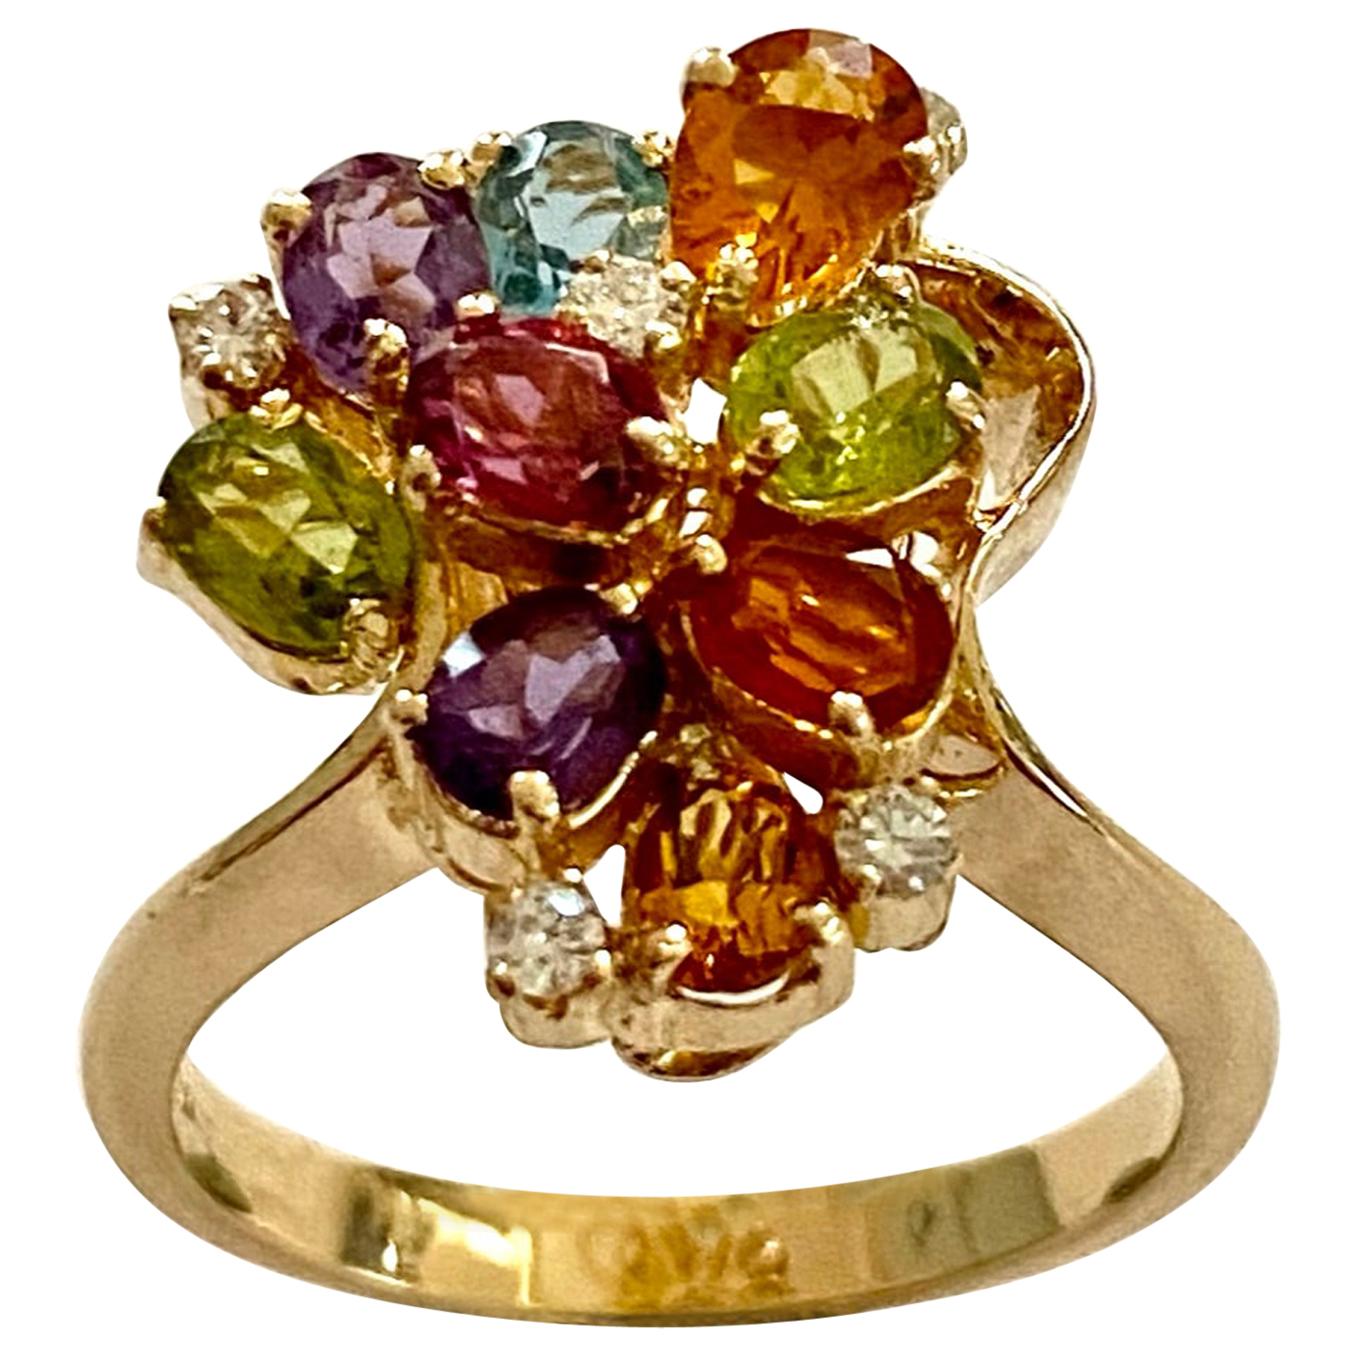 Gemstone Rings Amethyst Ring Triangle Ring Mneme Multi Gemstone Ring Garnet Ring Minimalist Ring Topaz Ring Three Stone Ring